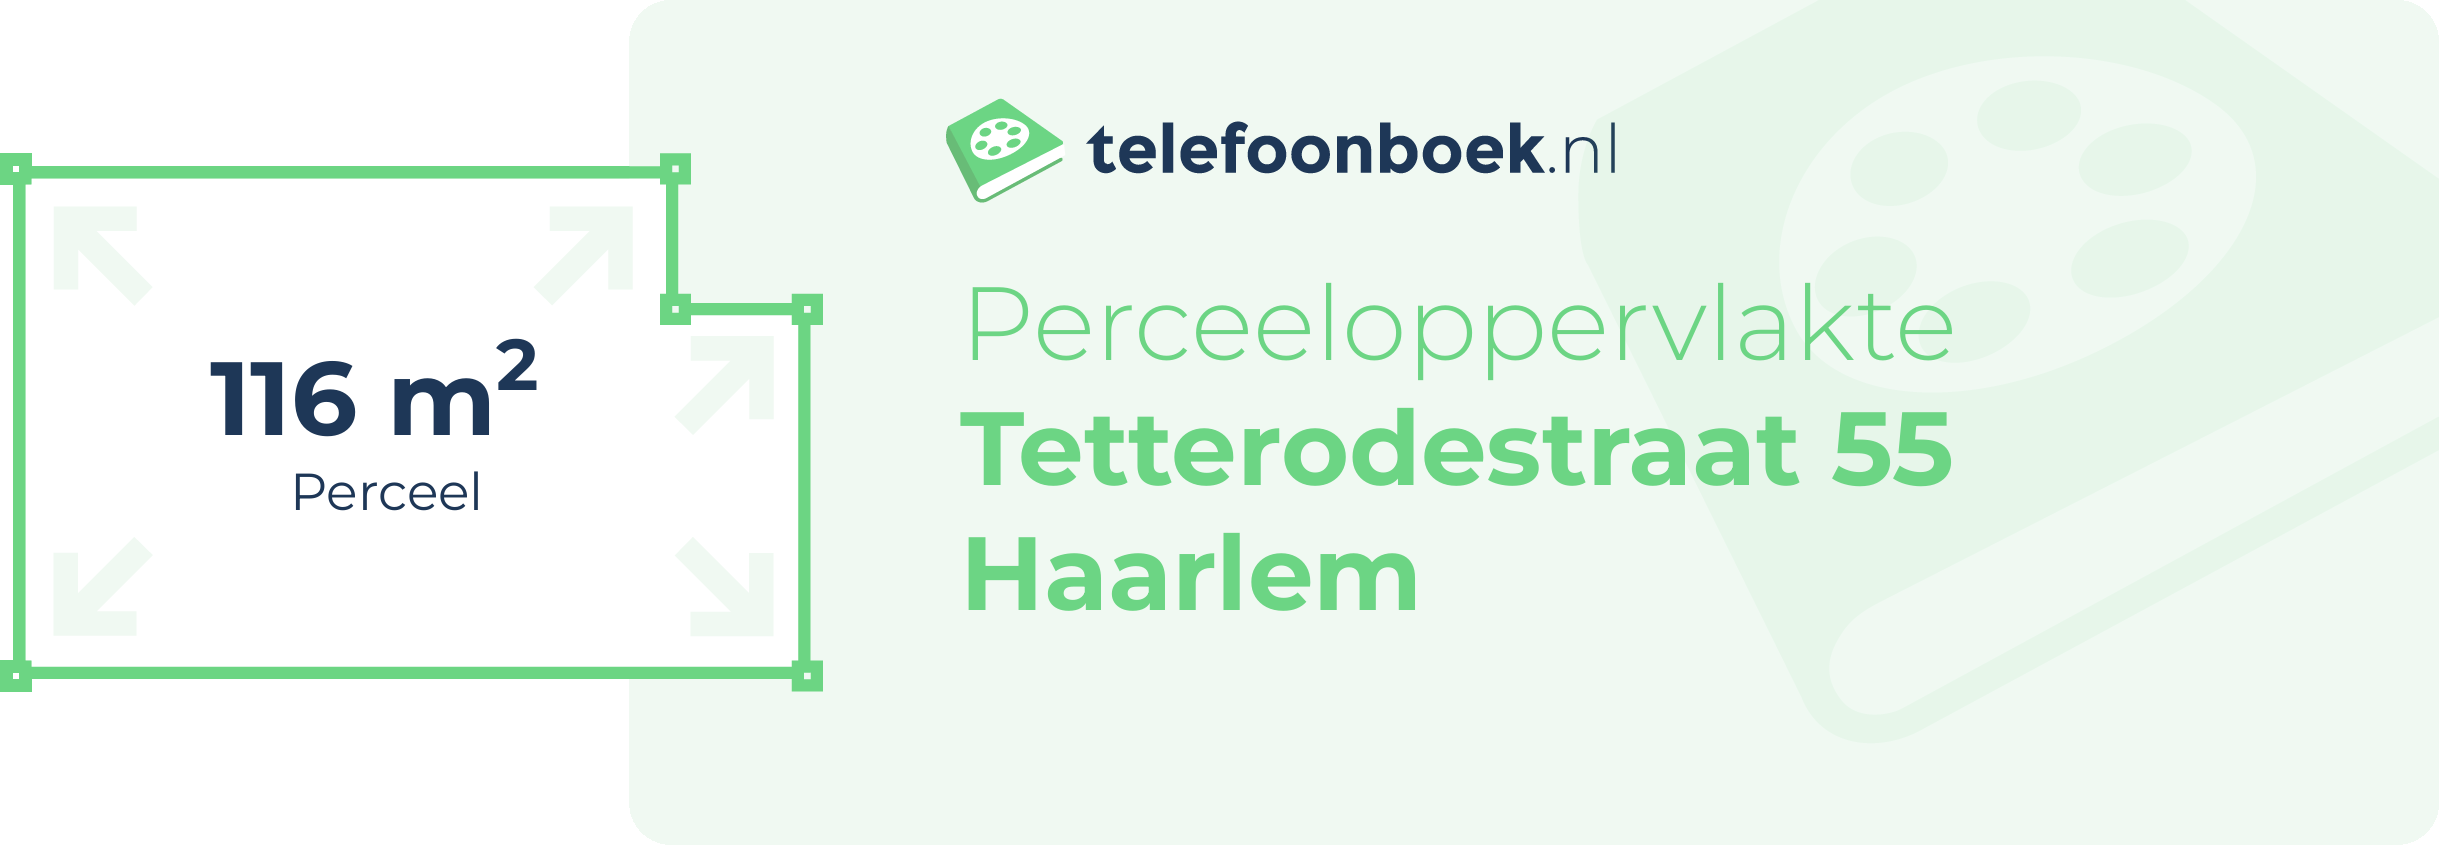 Perceeloppervlakte Tetterodestraat 55 Haarlem